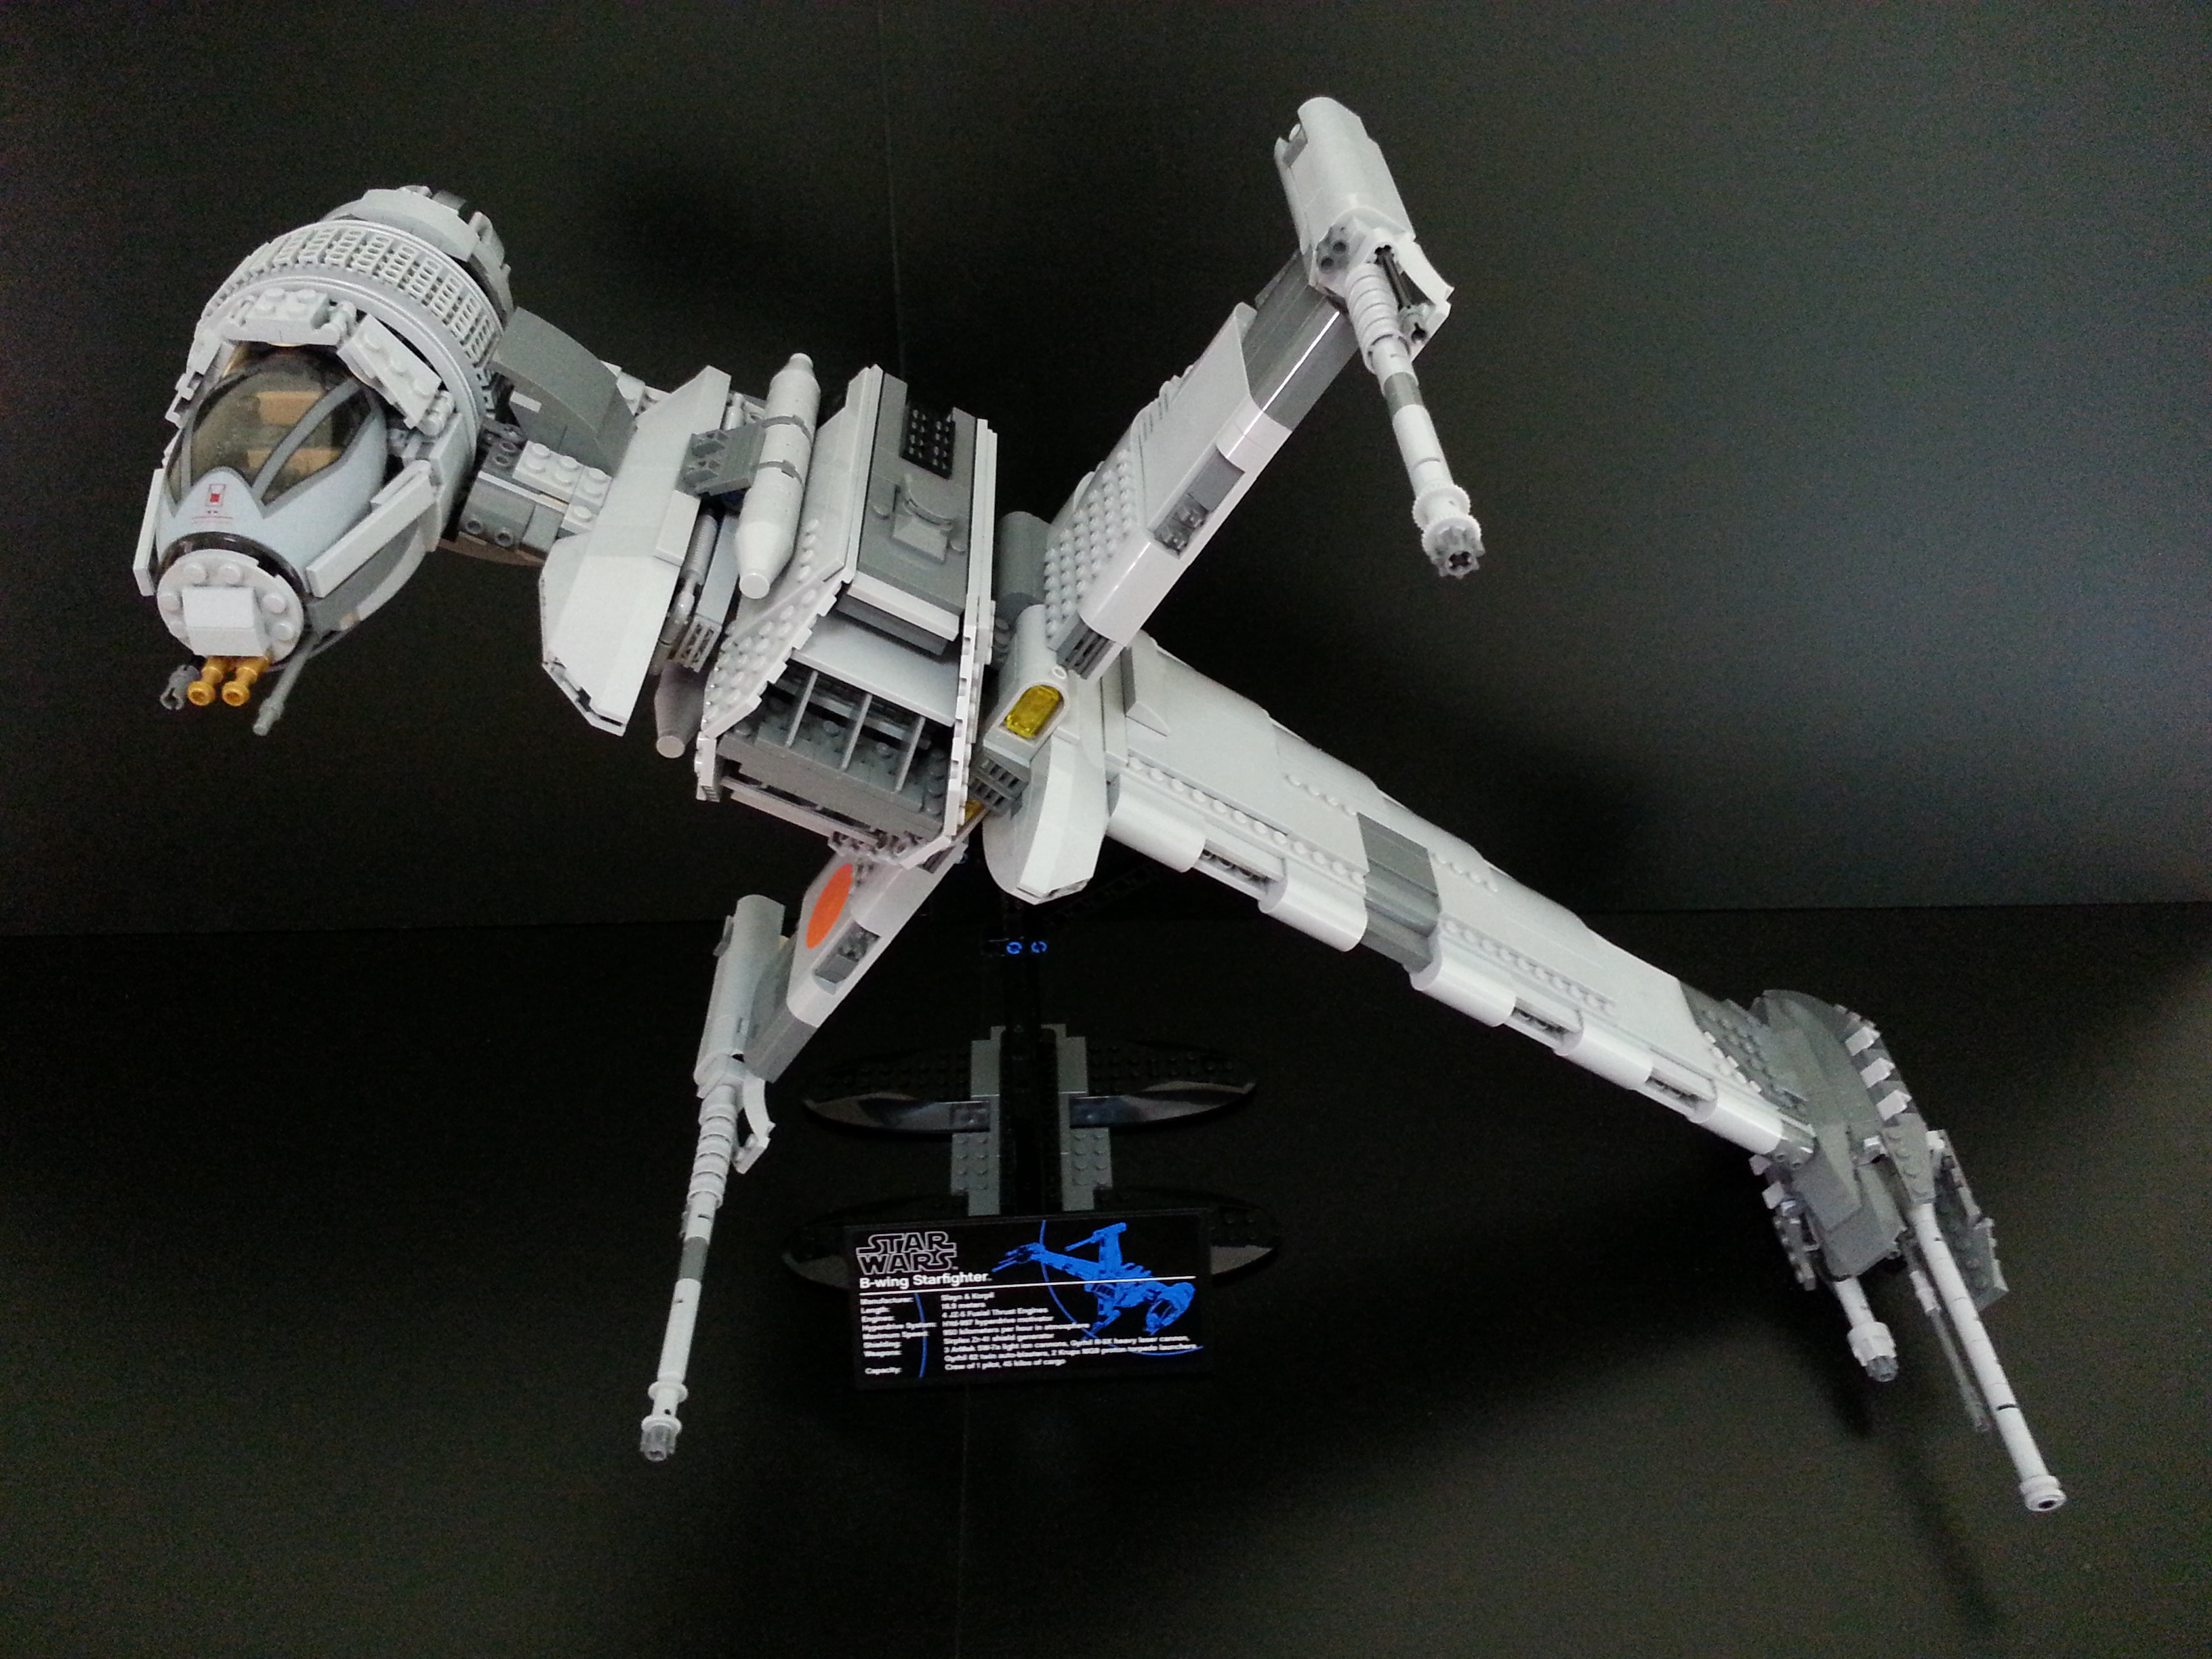 Lego Star Wars 10227 â€“ B-Wing Starfighter | exzekestence's Blog